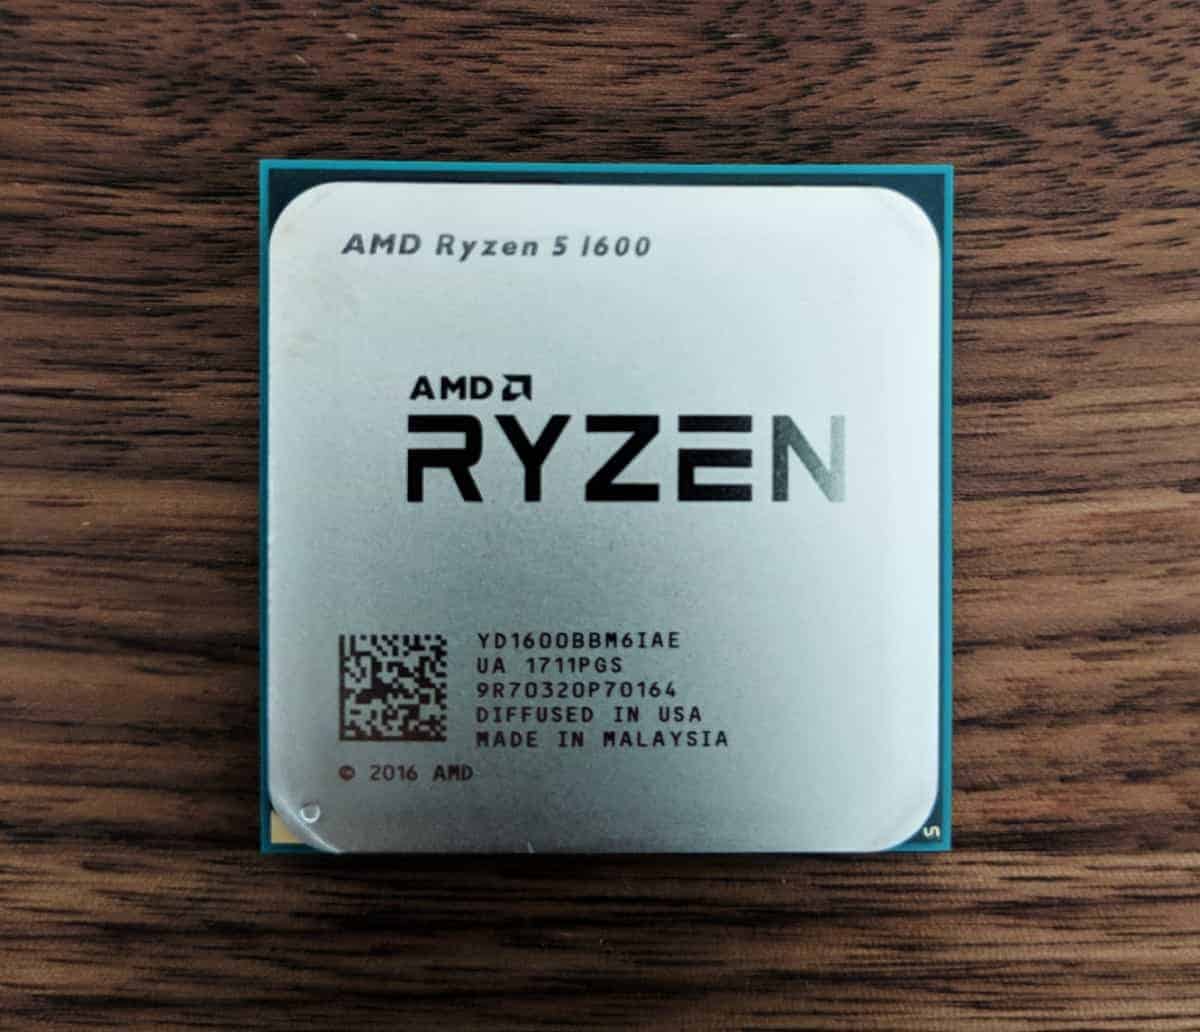 Ryzen x6. AMD Ryzen 5 1600. Процессор AMD Ryzen 5. Процессор АМД райзен 5. Процессор AMD Ryzen 5 1600x.